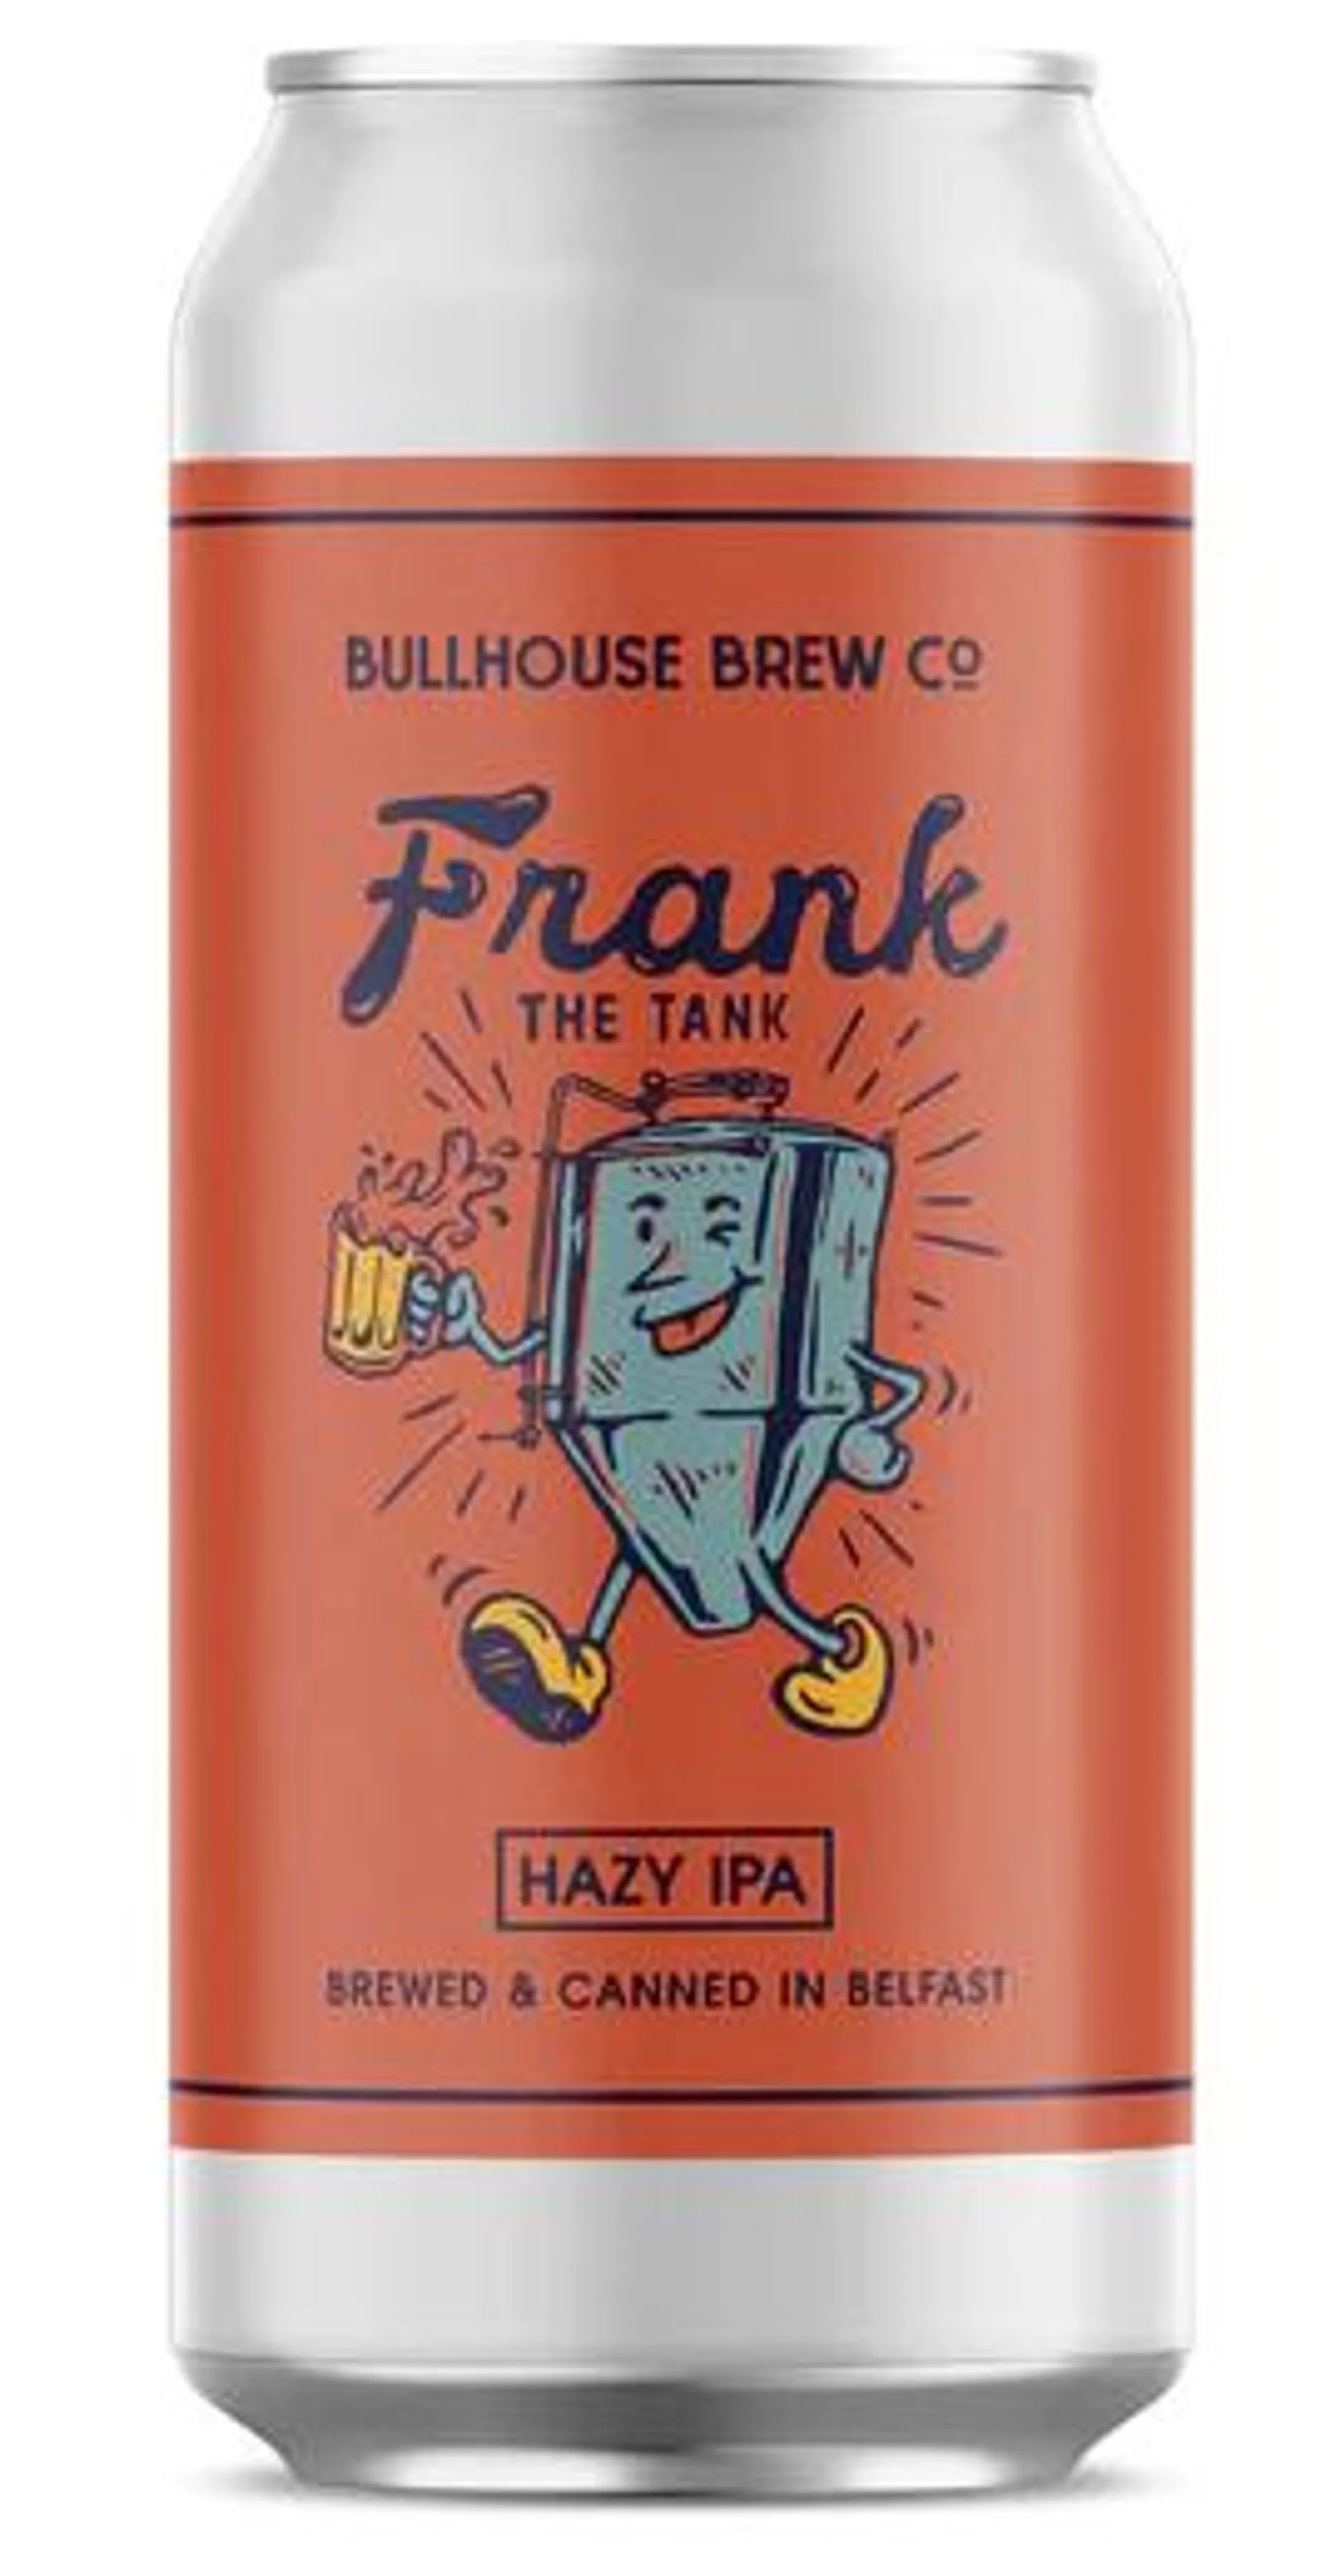 Bullhouse Brew- Frank the Tank Hazy IPA 5% ABV 440ml Can